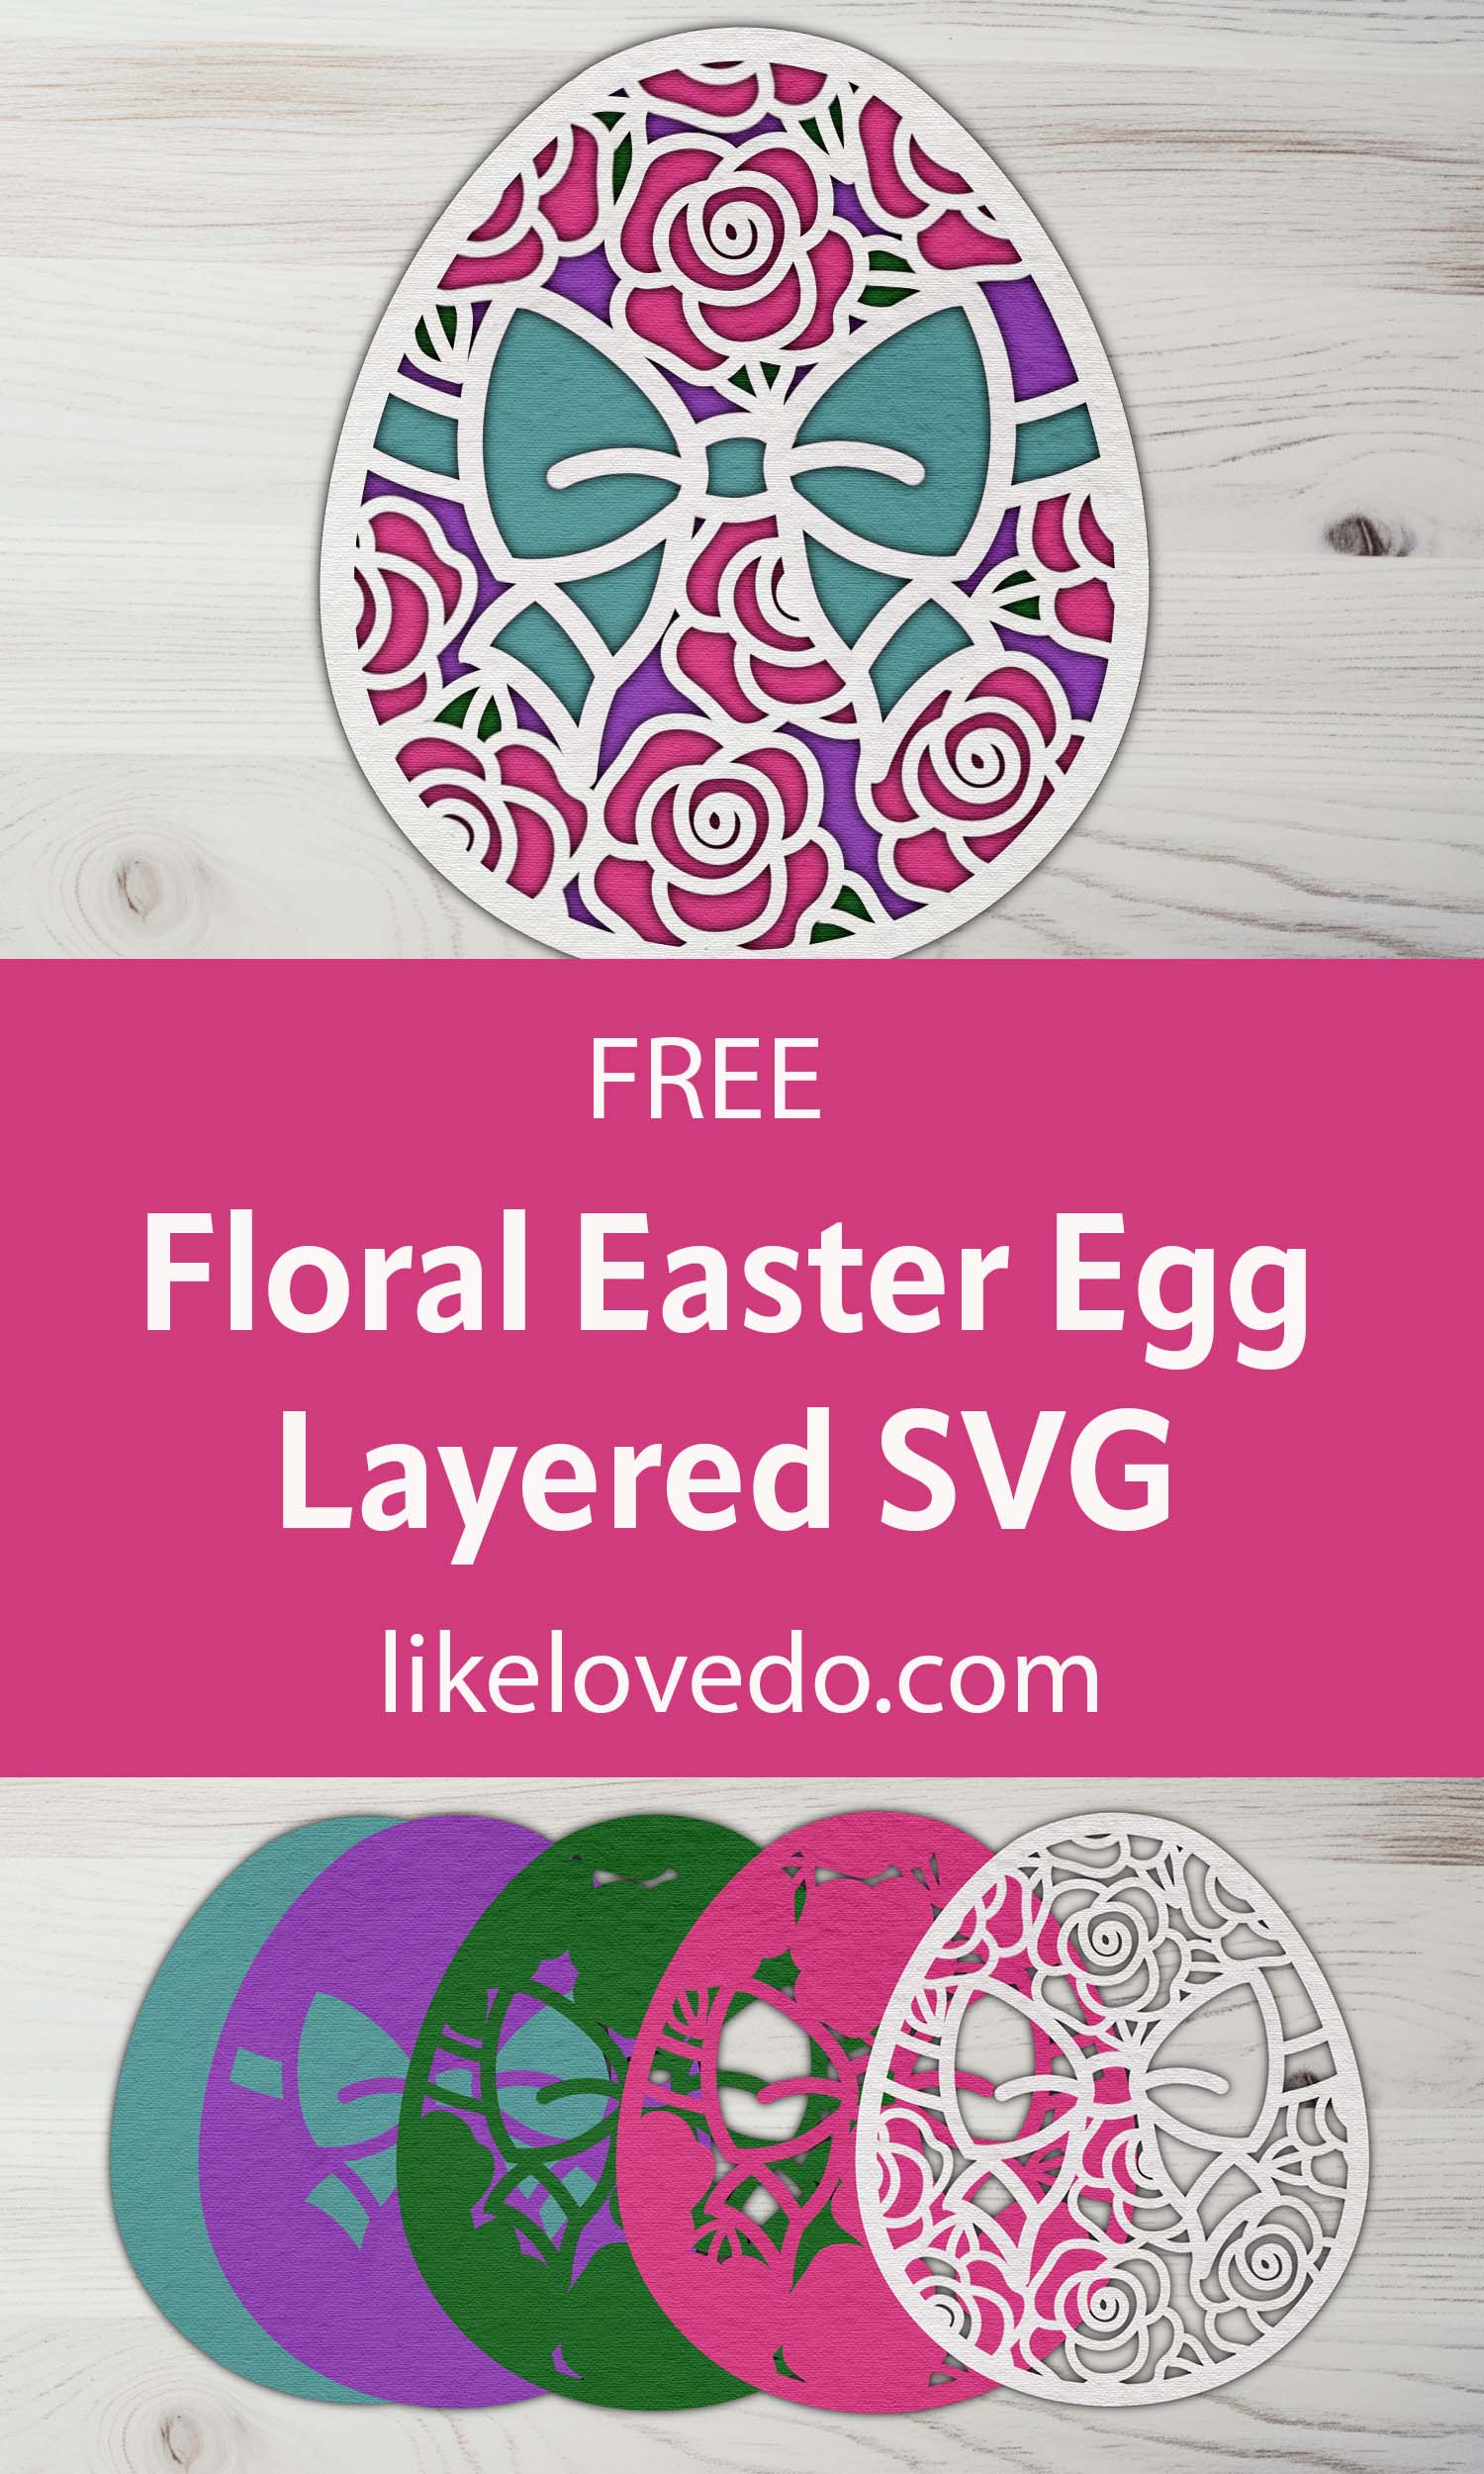 Layered Easter floral rose egg SVG free pin Image